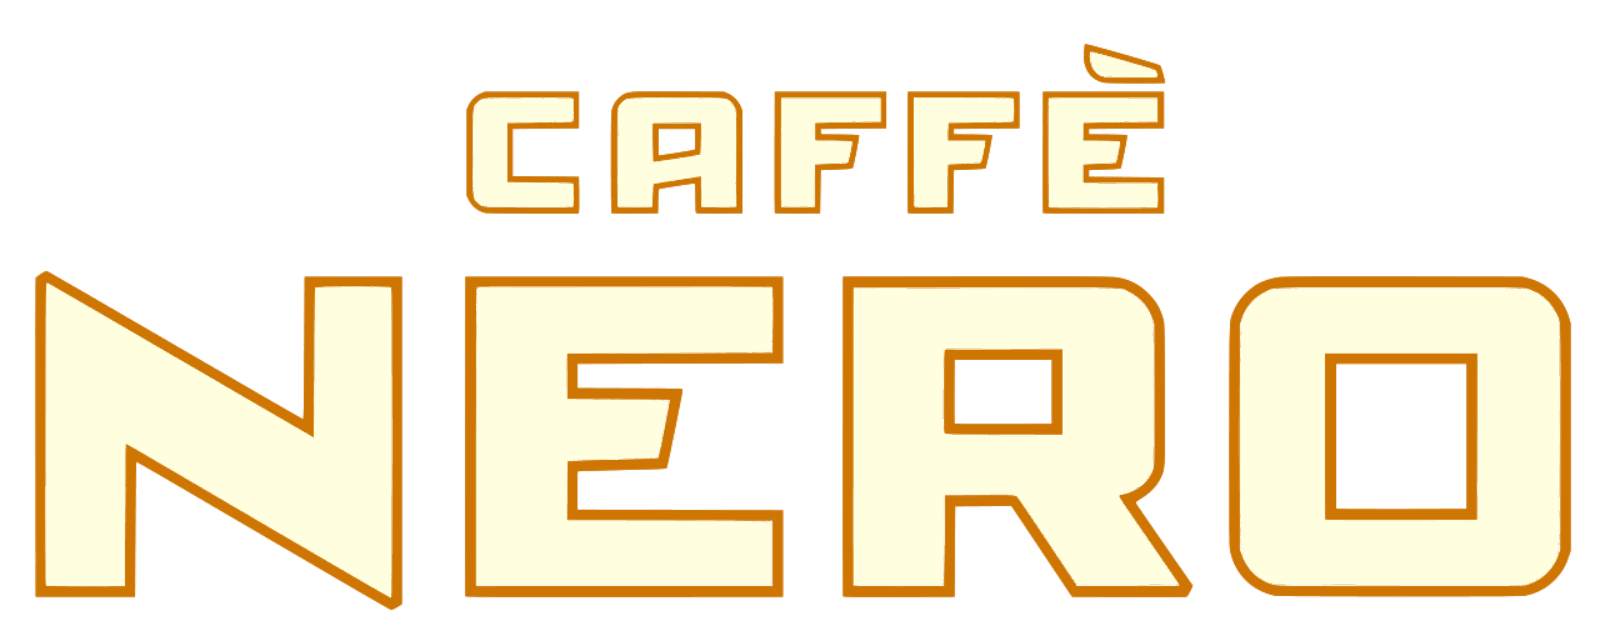 Caffe Nero Group